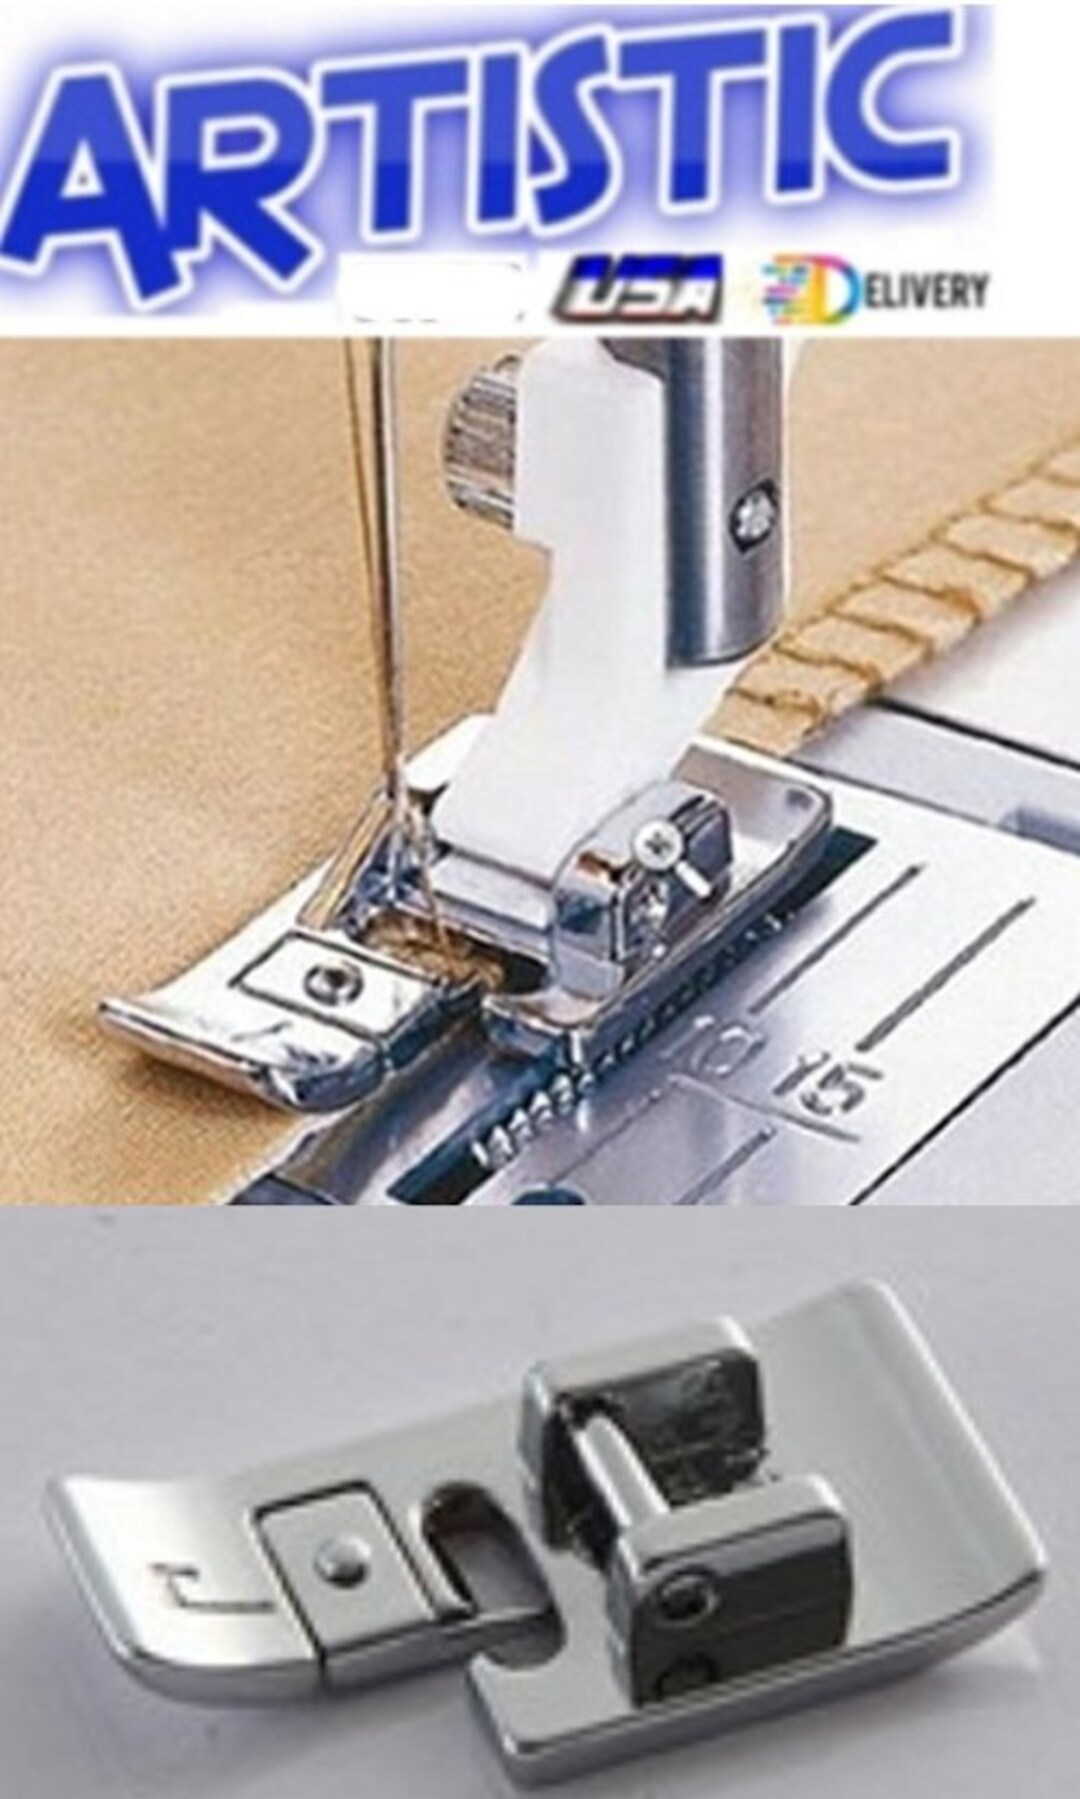 Needle hitting bobbin holder? : r/sewing